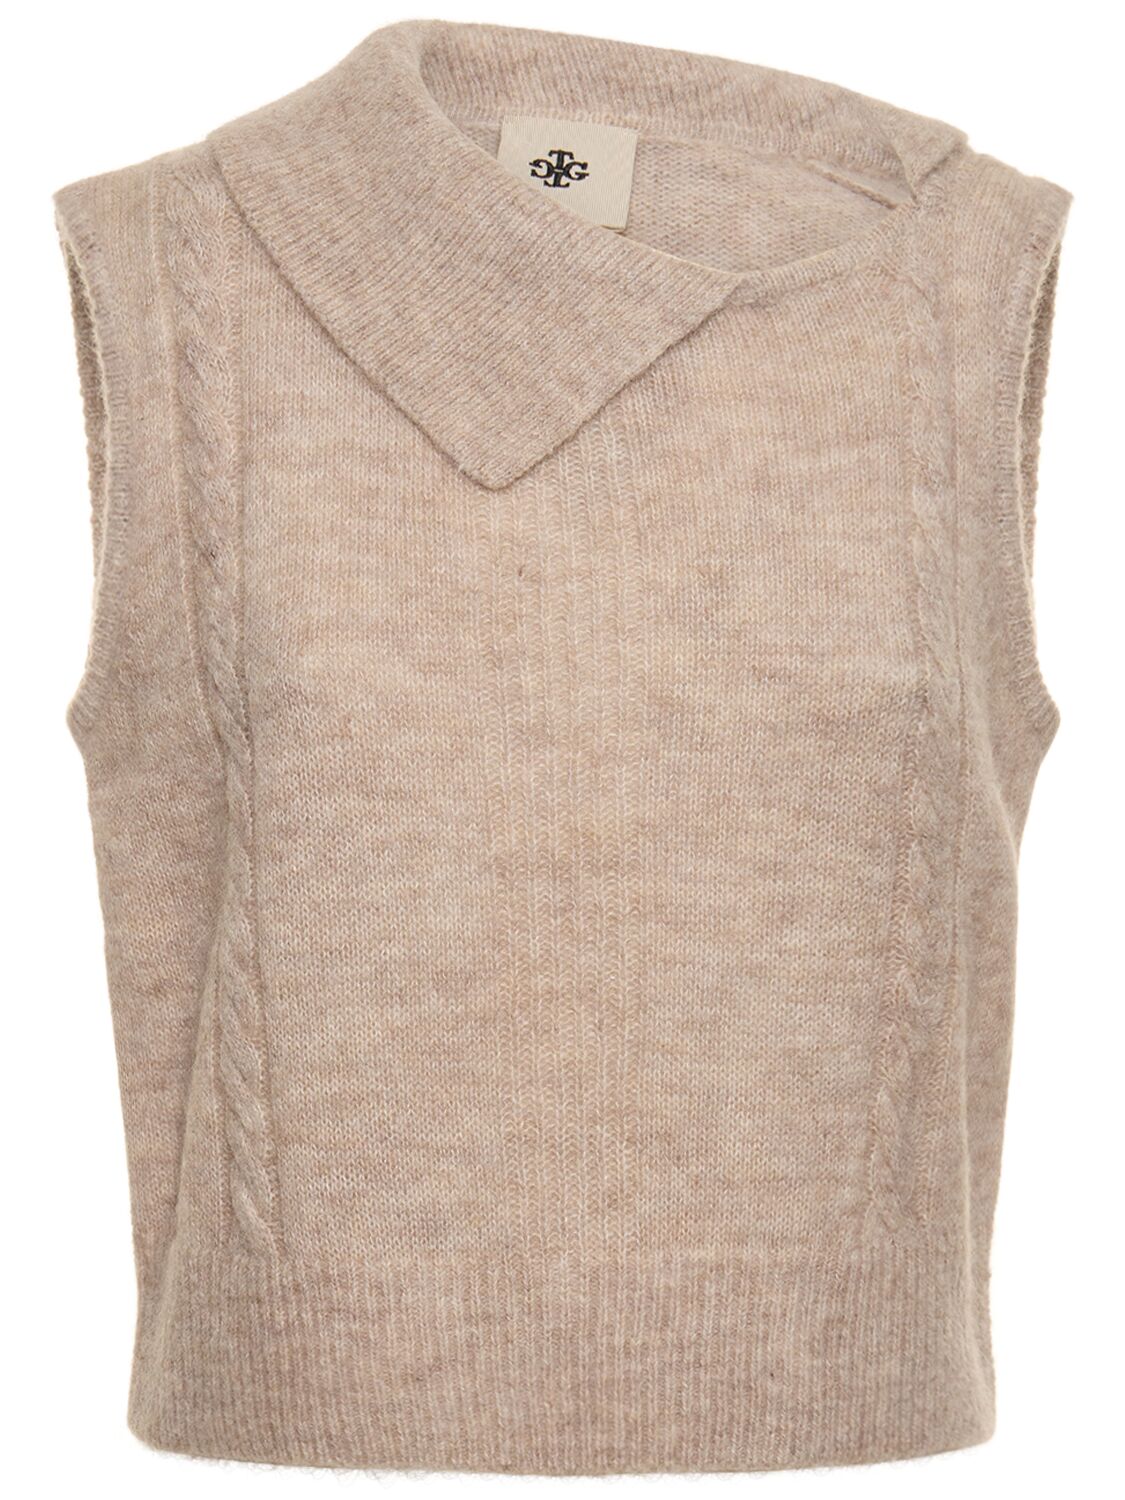 The Garment Verbier Knitted Vest In Beige